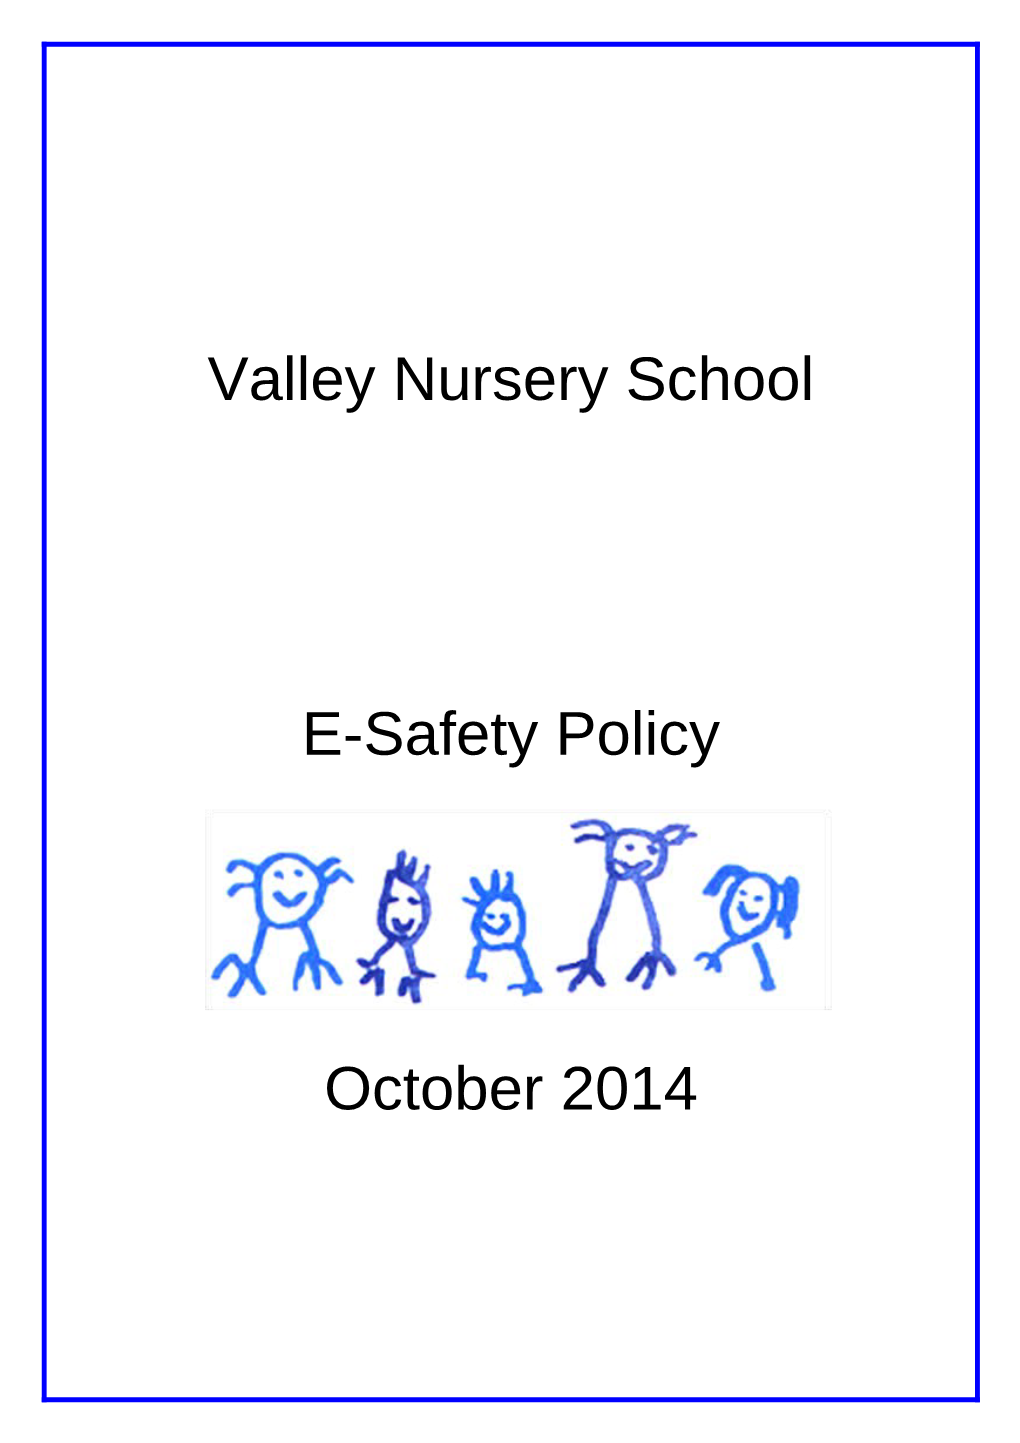 Valley Nursery School